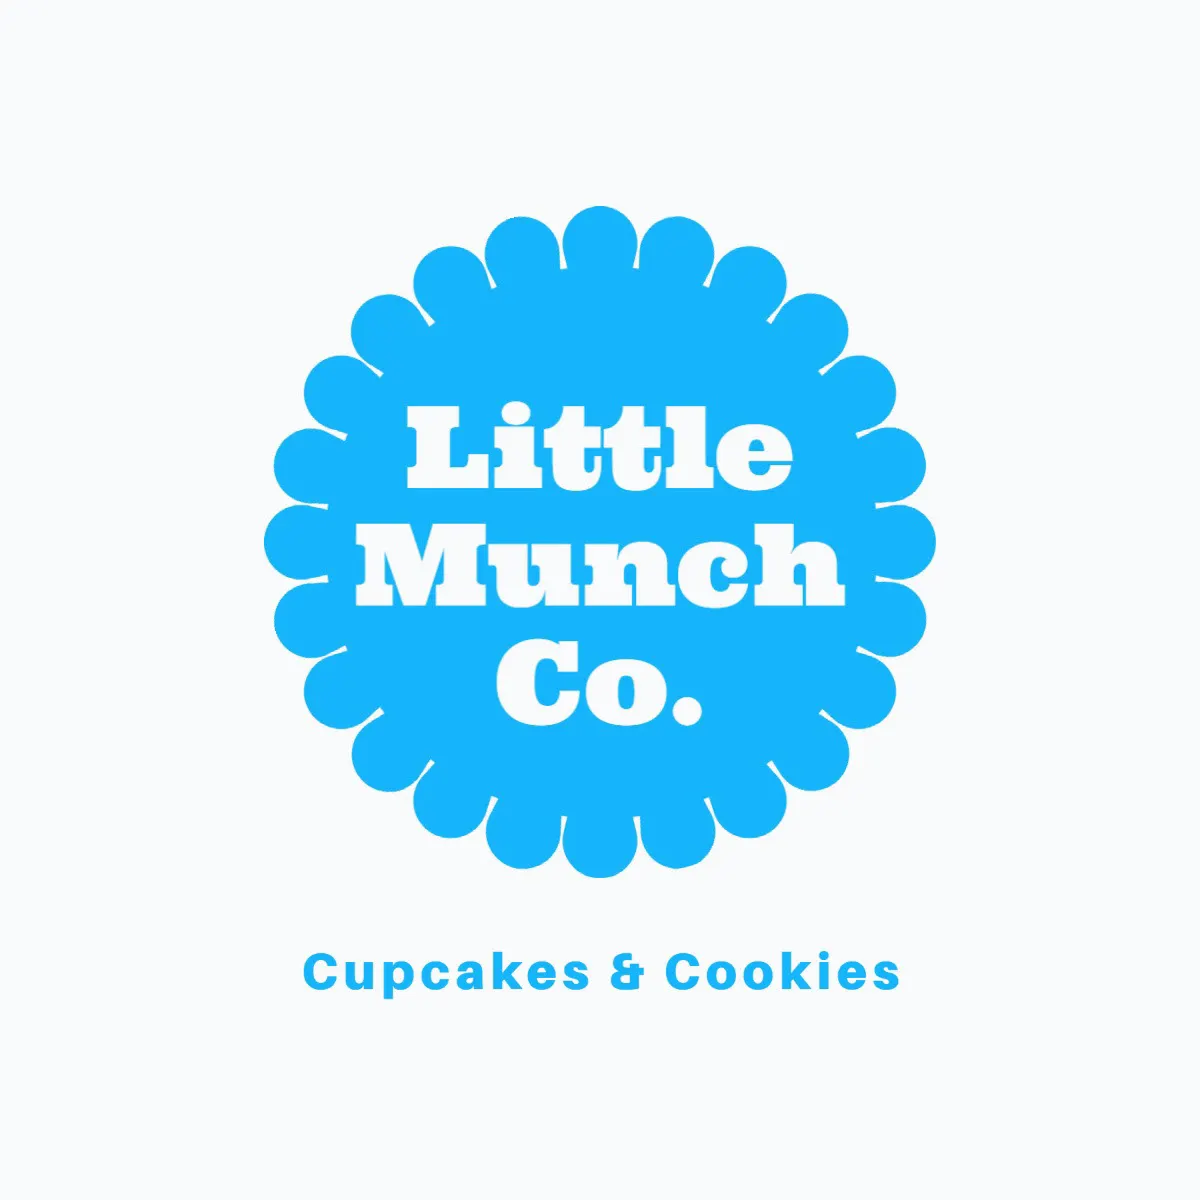 Blue & White Cupcakes & Cookies Logo